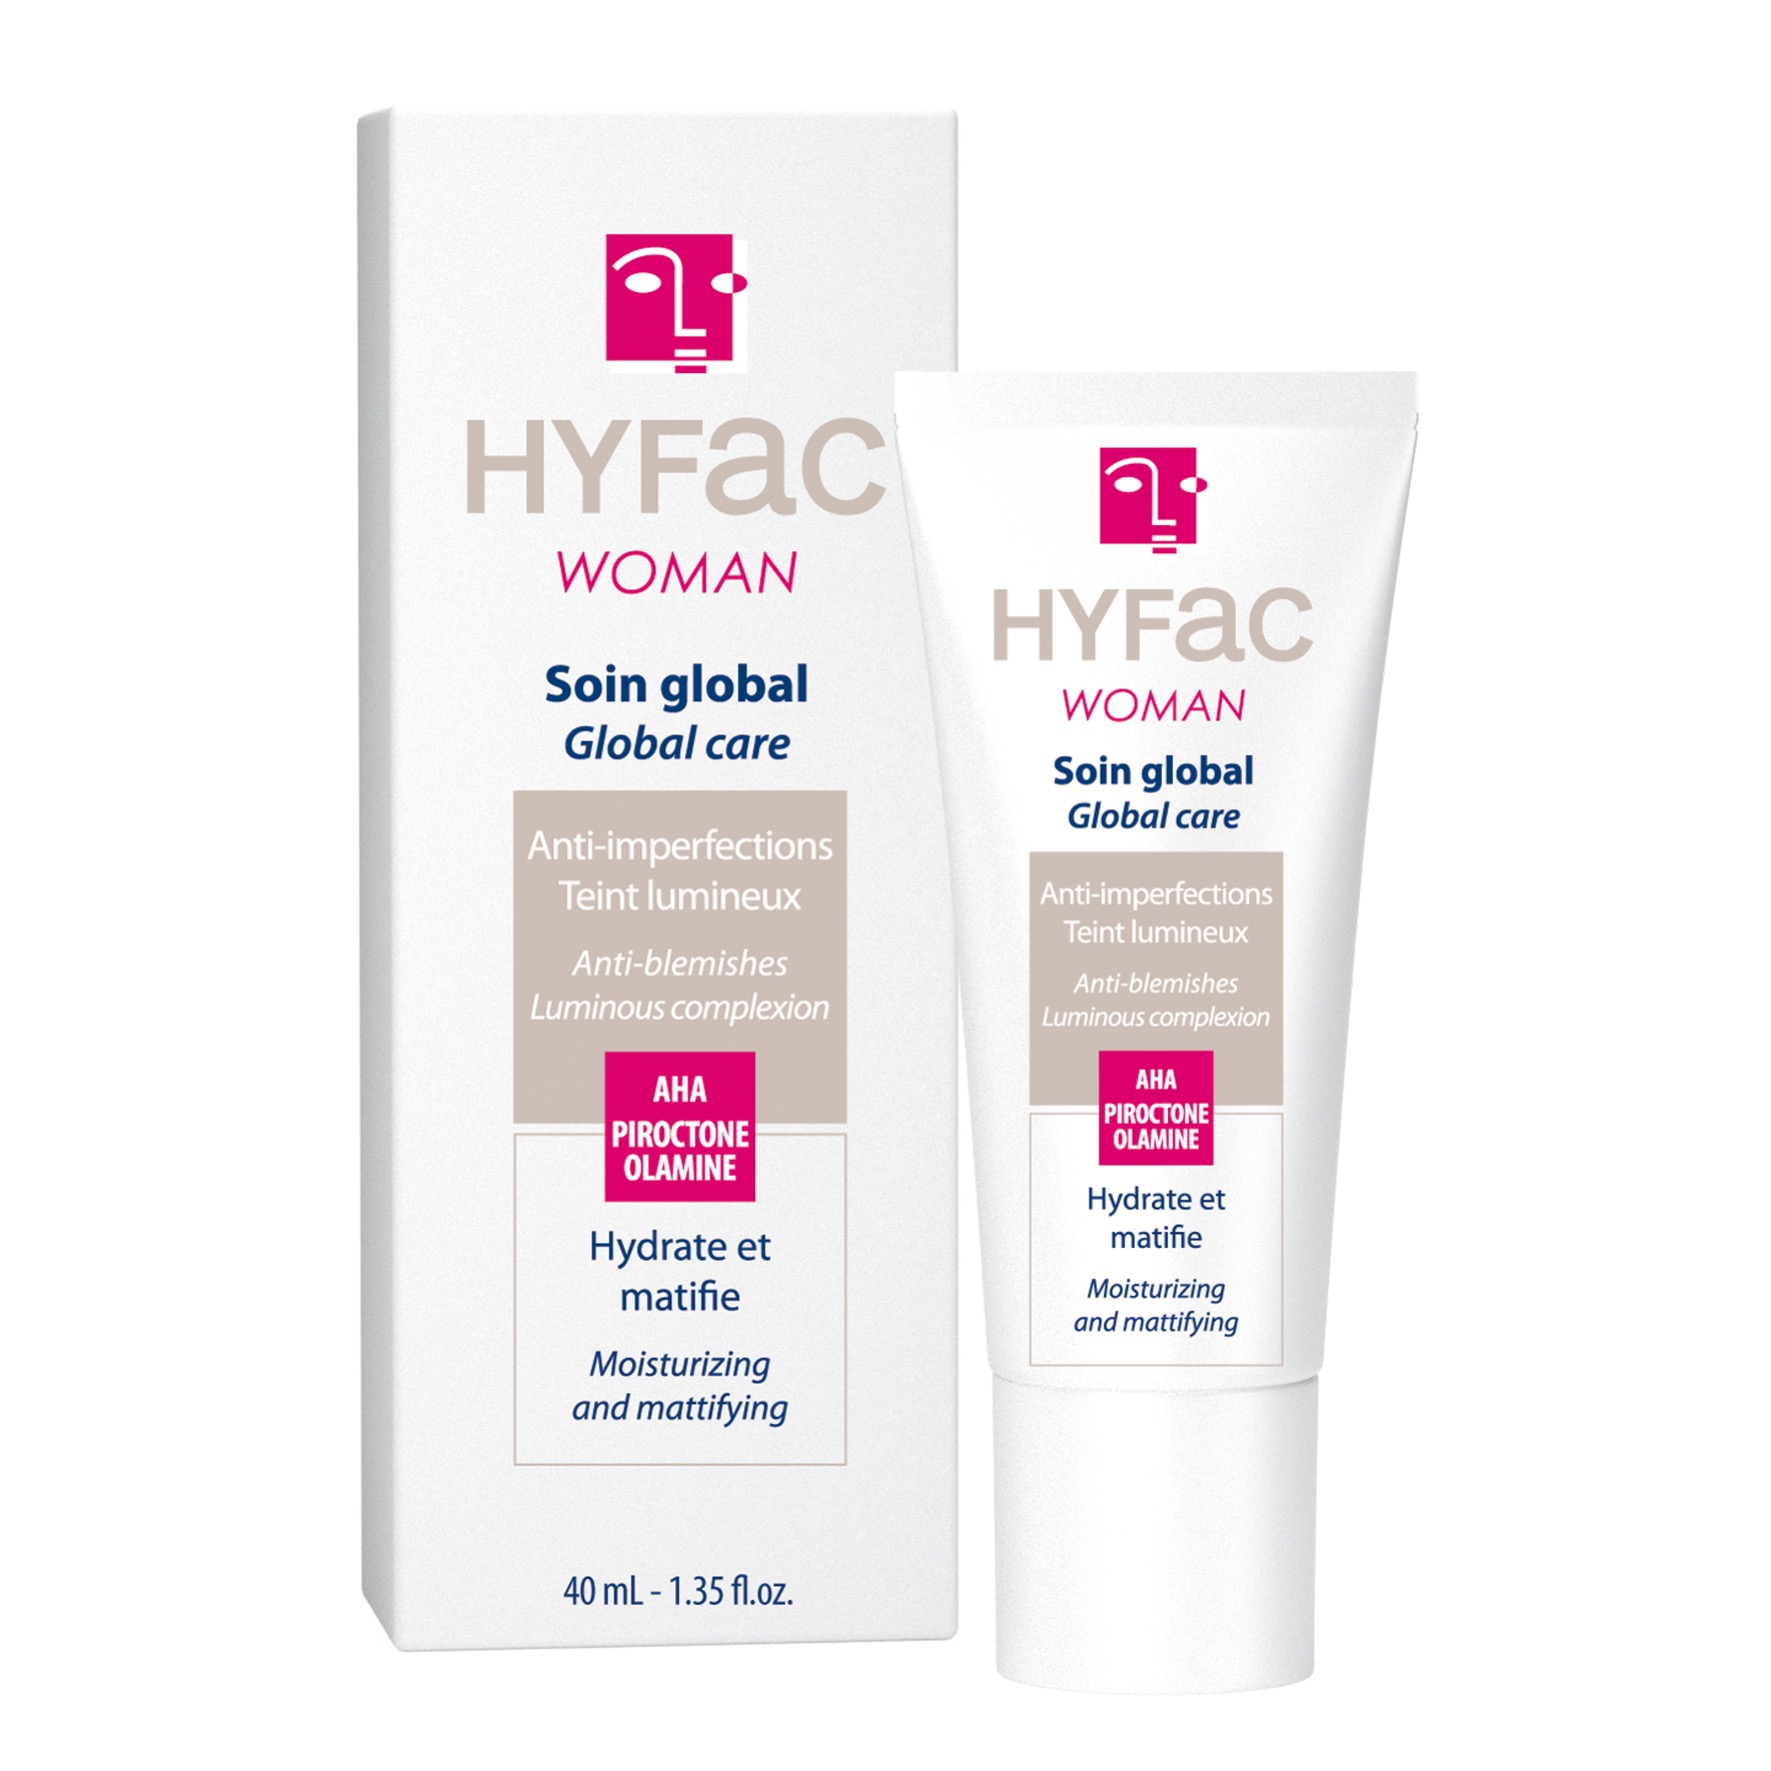 HYFAC WOMAN soin global anti imperfection femme acné